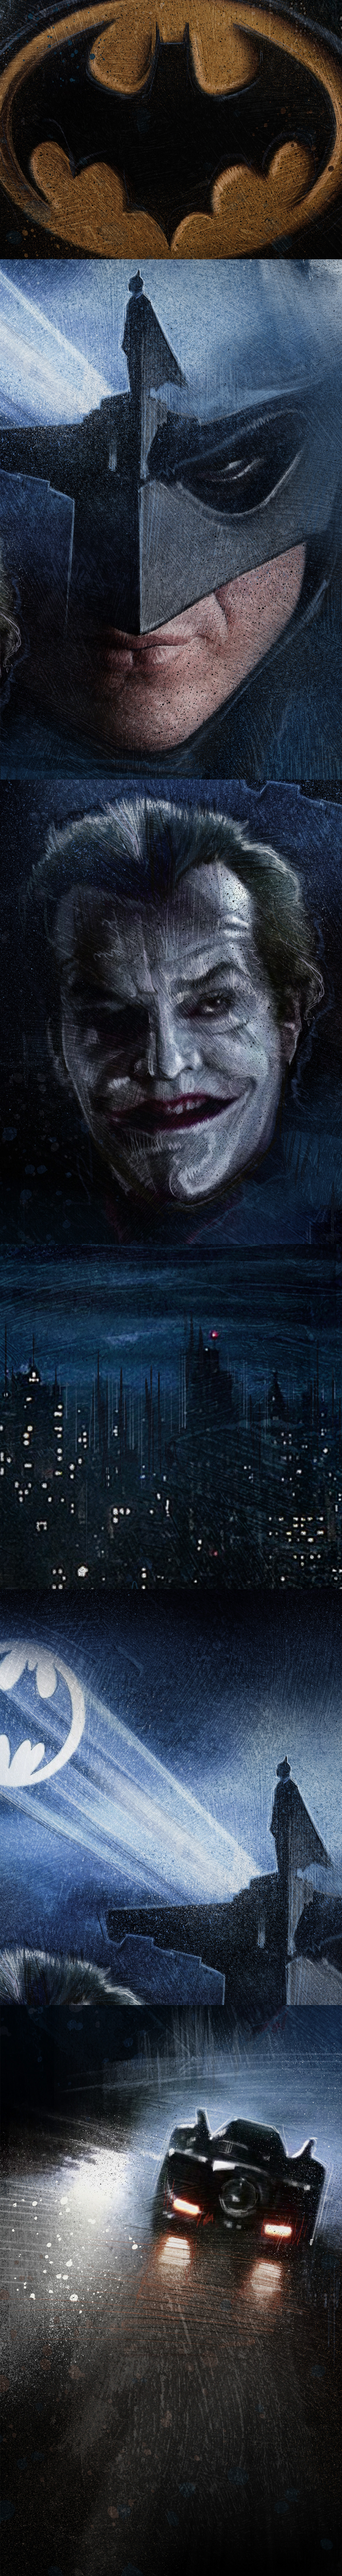 batman warner bros Dc Comics Michael Keaton Jack Nicholson Tim Burton poster movie Batmobile gotham city signal bat